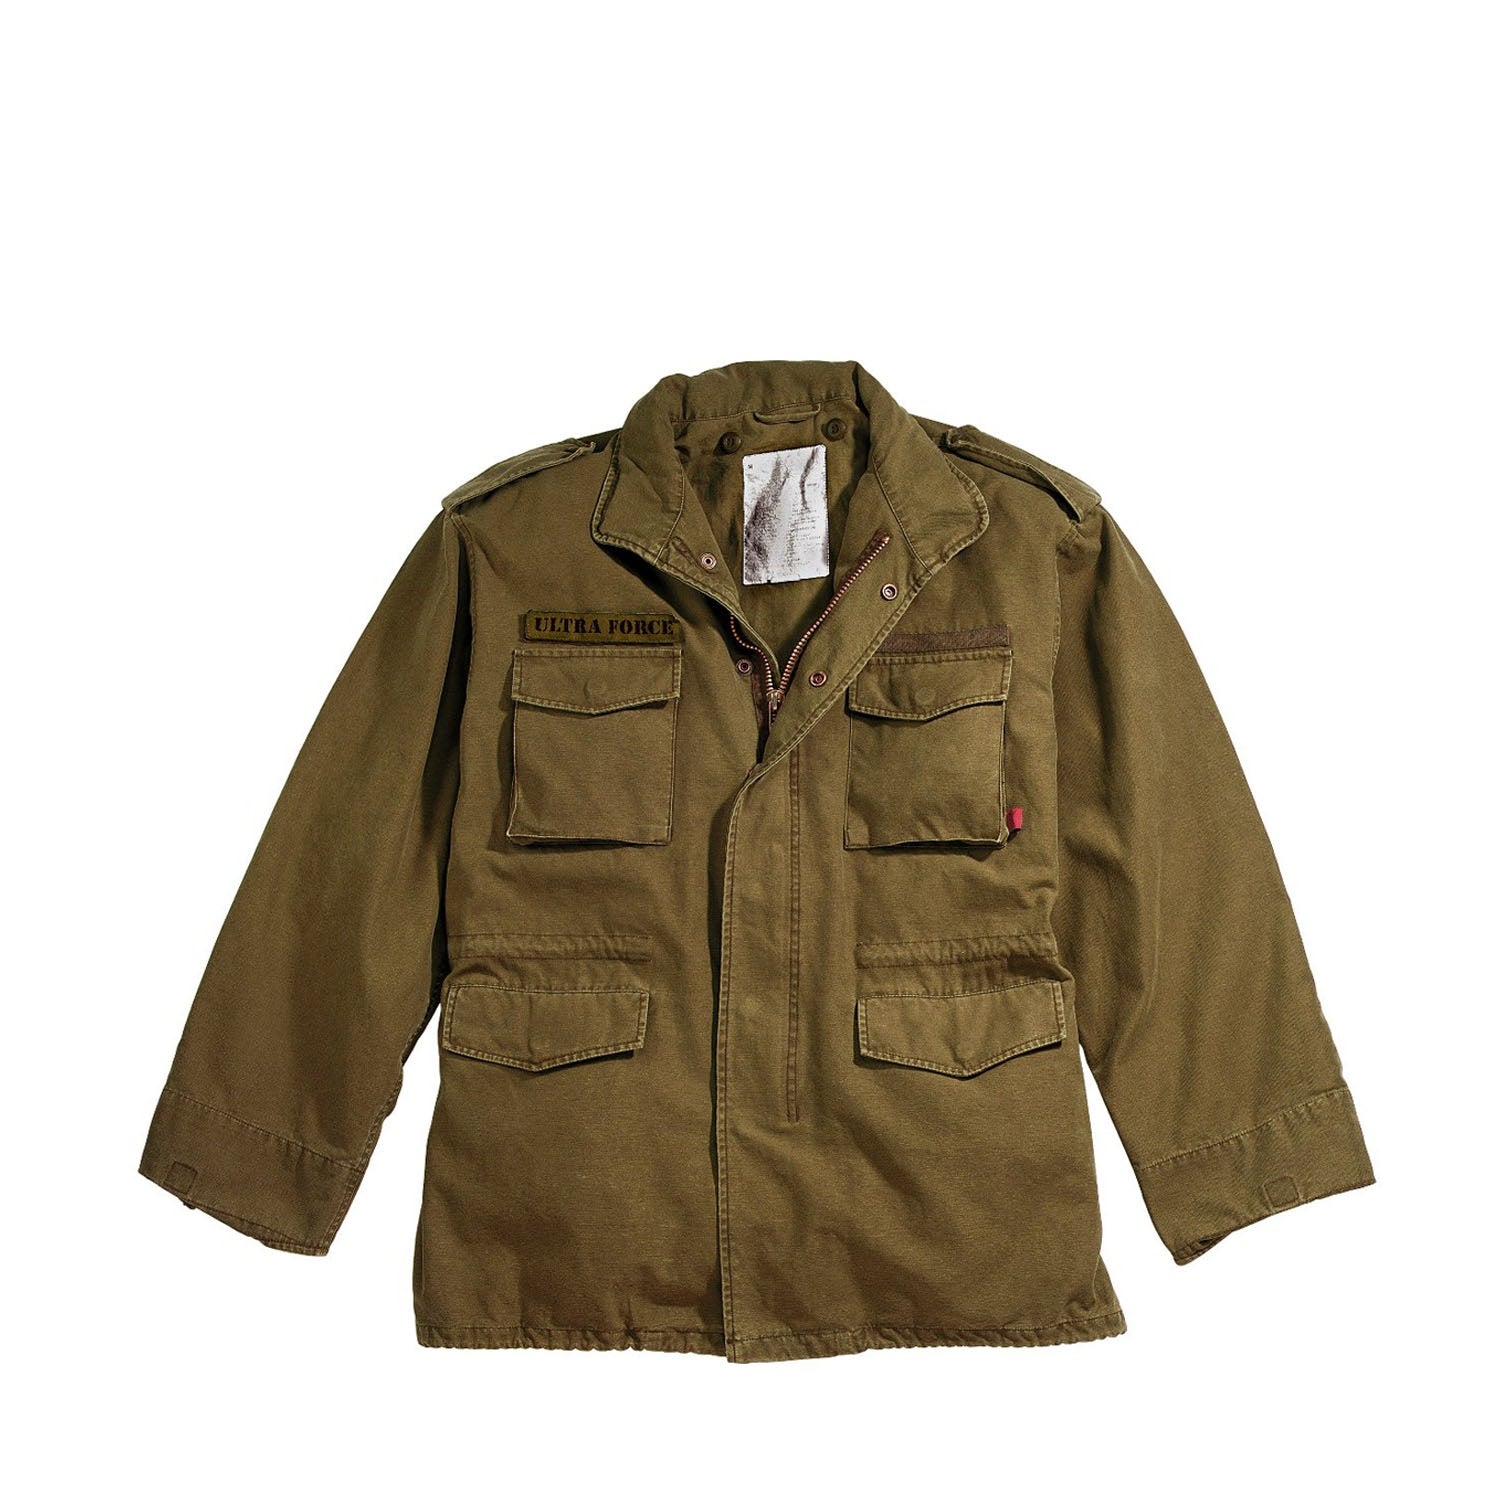 Rothco Vintage M-65 Field Jacket